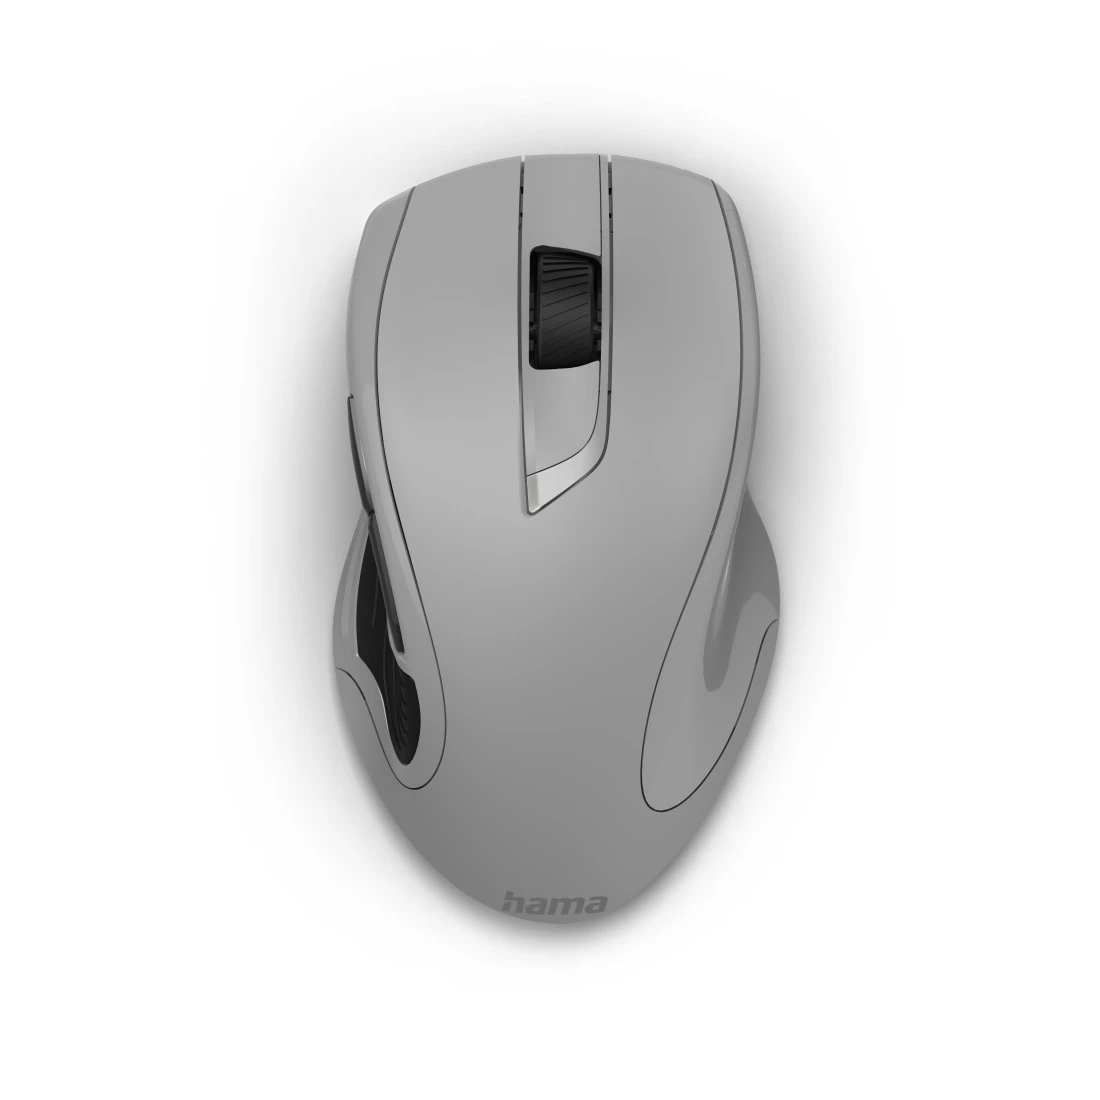 Hama 00173018 MW-900 V2 7-Button Laser Wireless Mouse, light grey